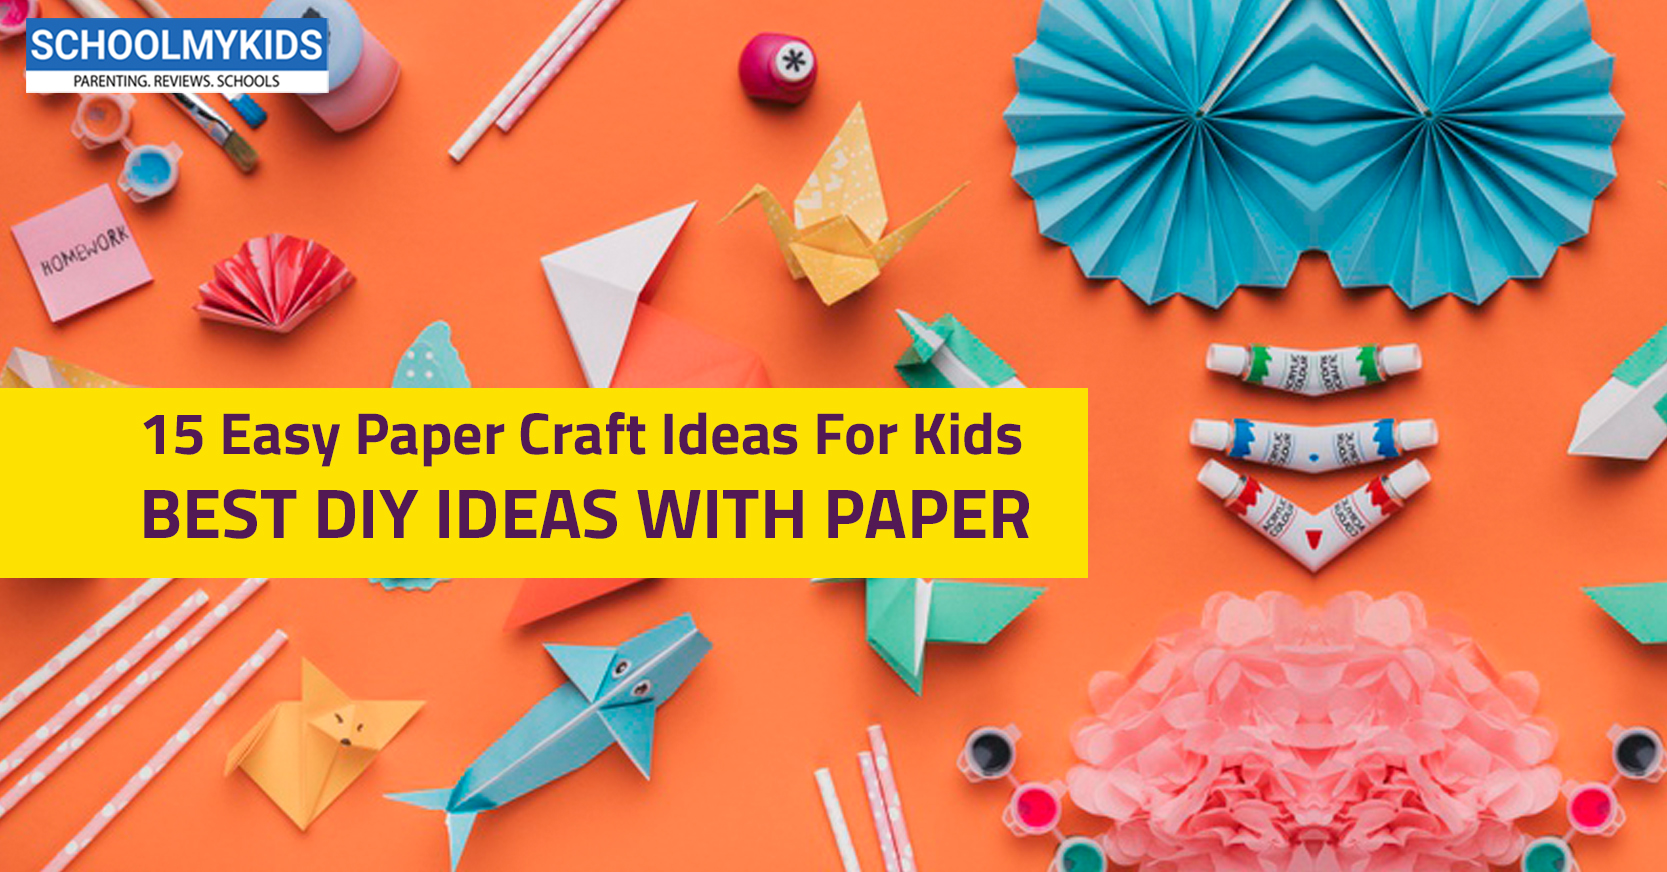 15 Easy Paper Craft Ideas For Kids Best Diy With Schoolmykids